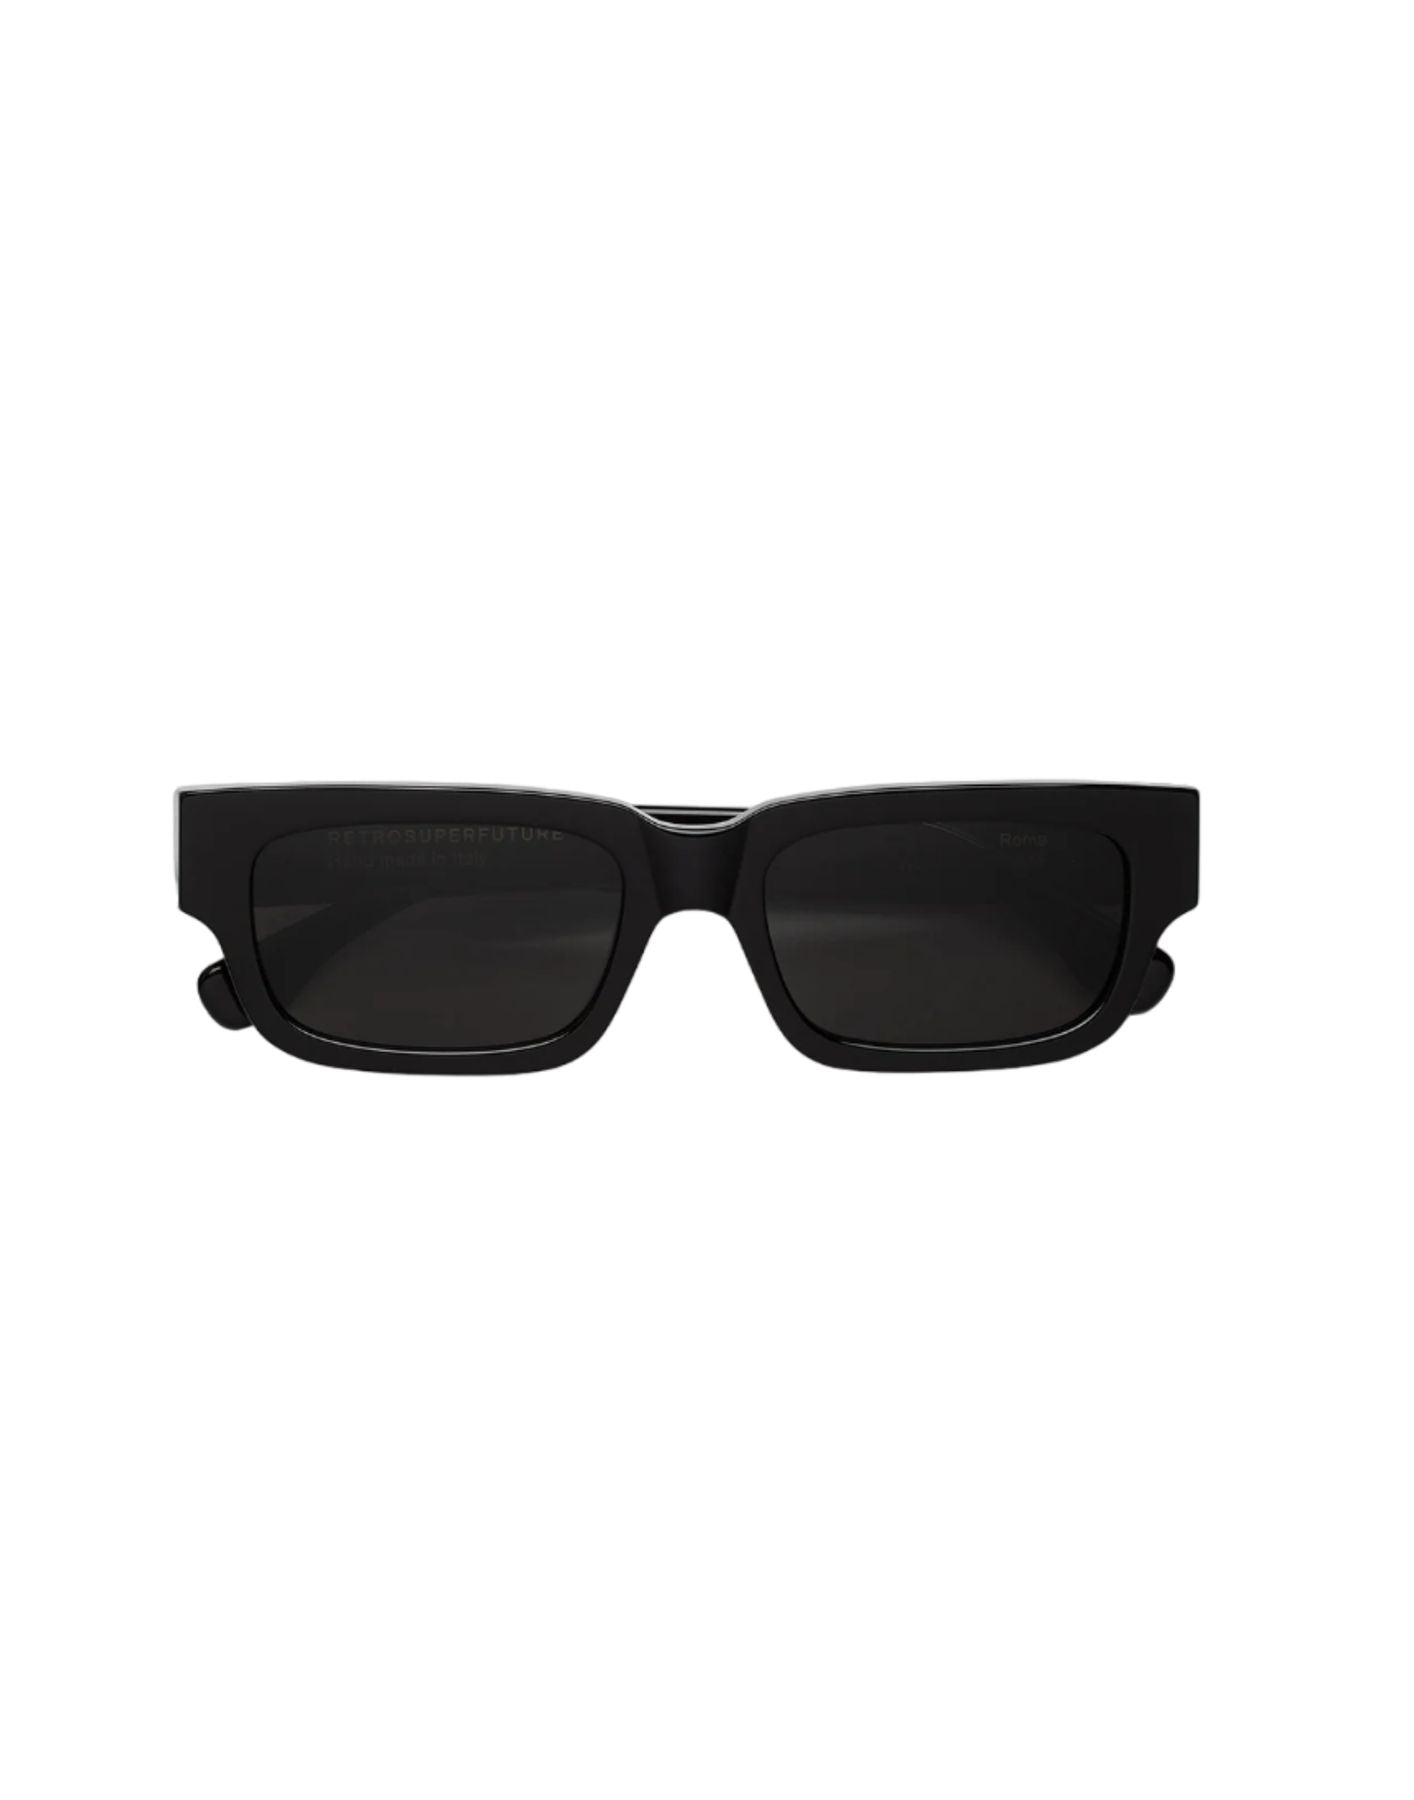 Sunglasses unisex ROMA BLACK WCH Retrosuperfuture